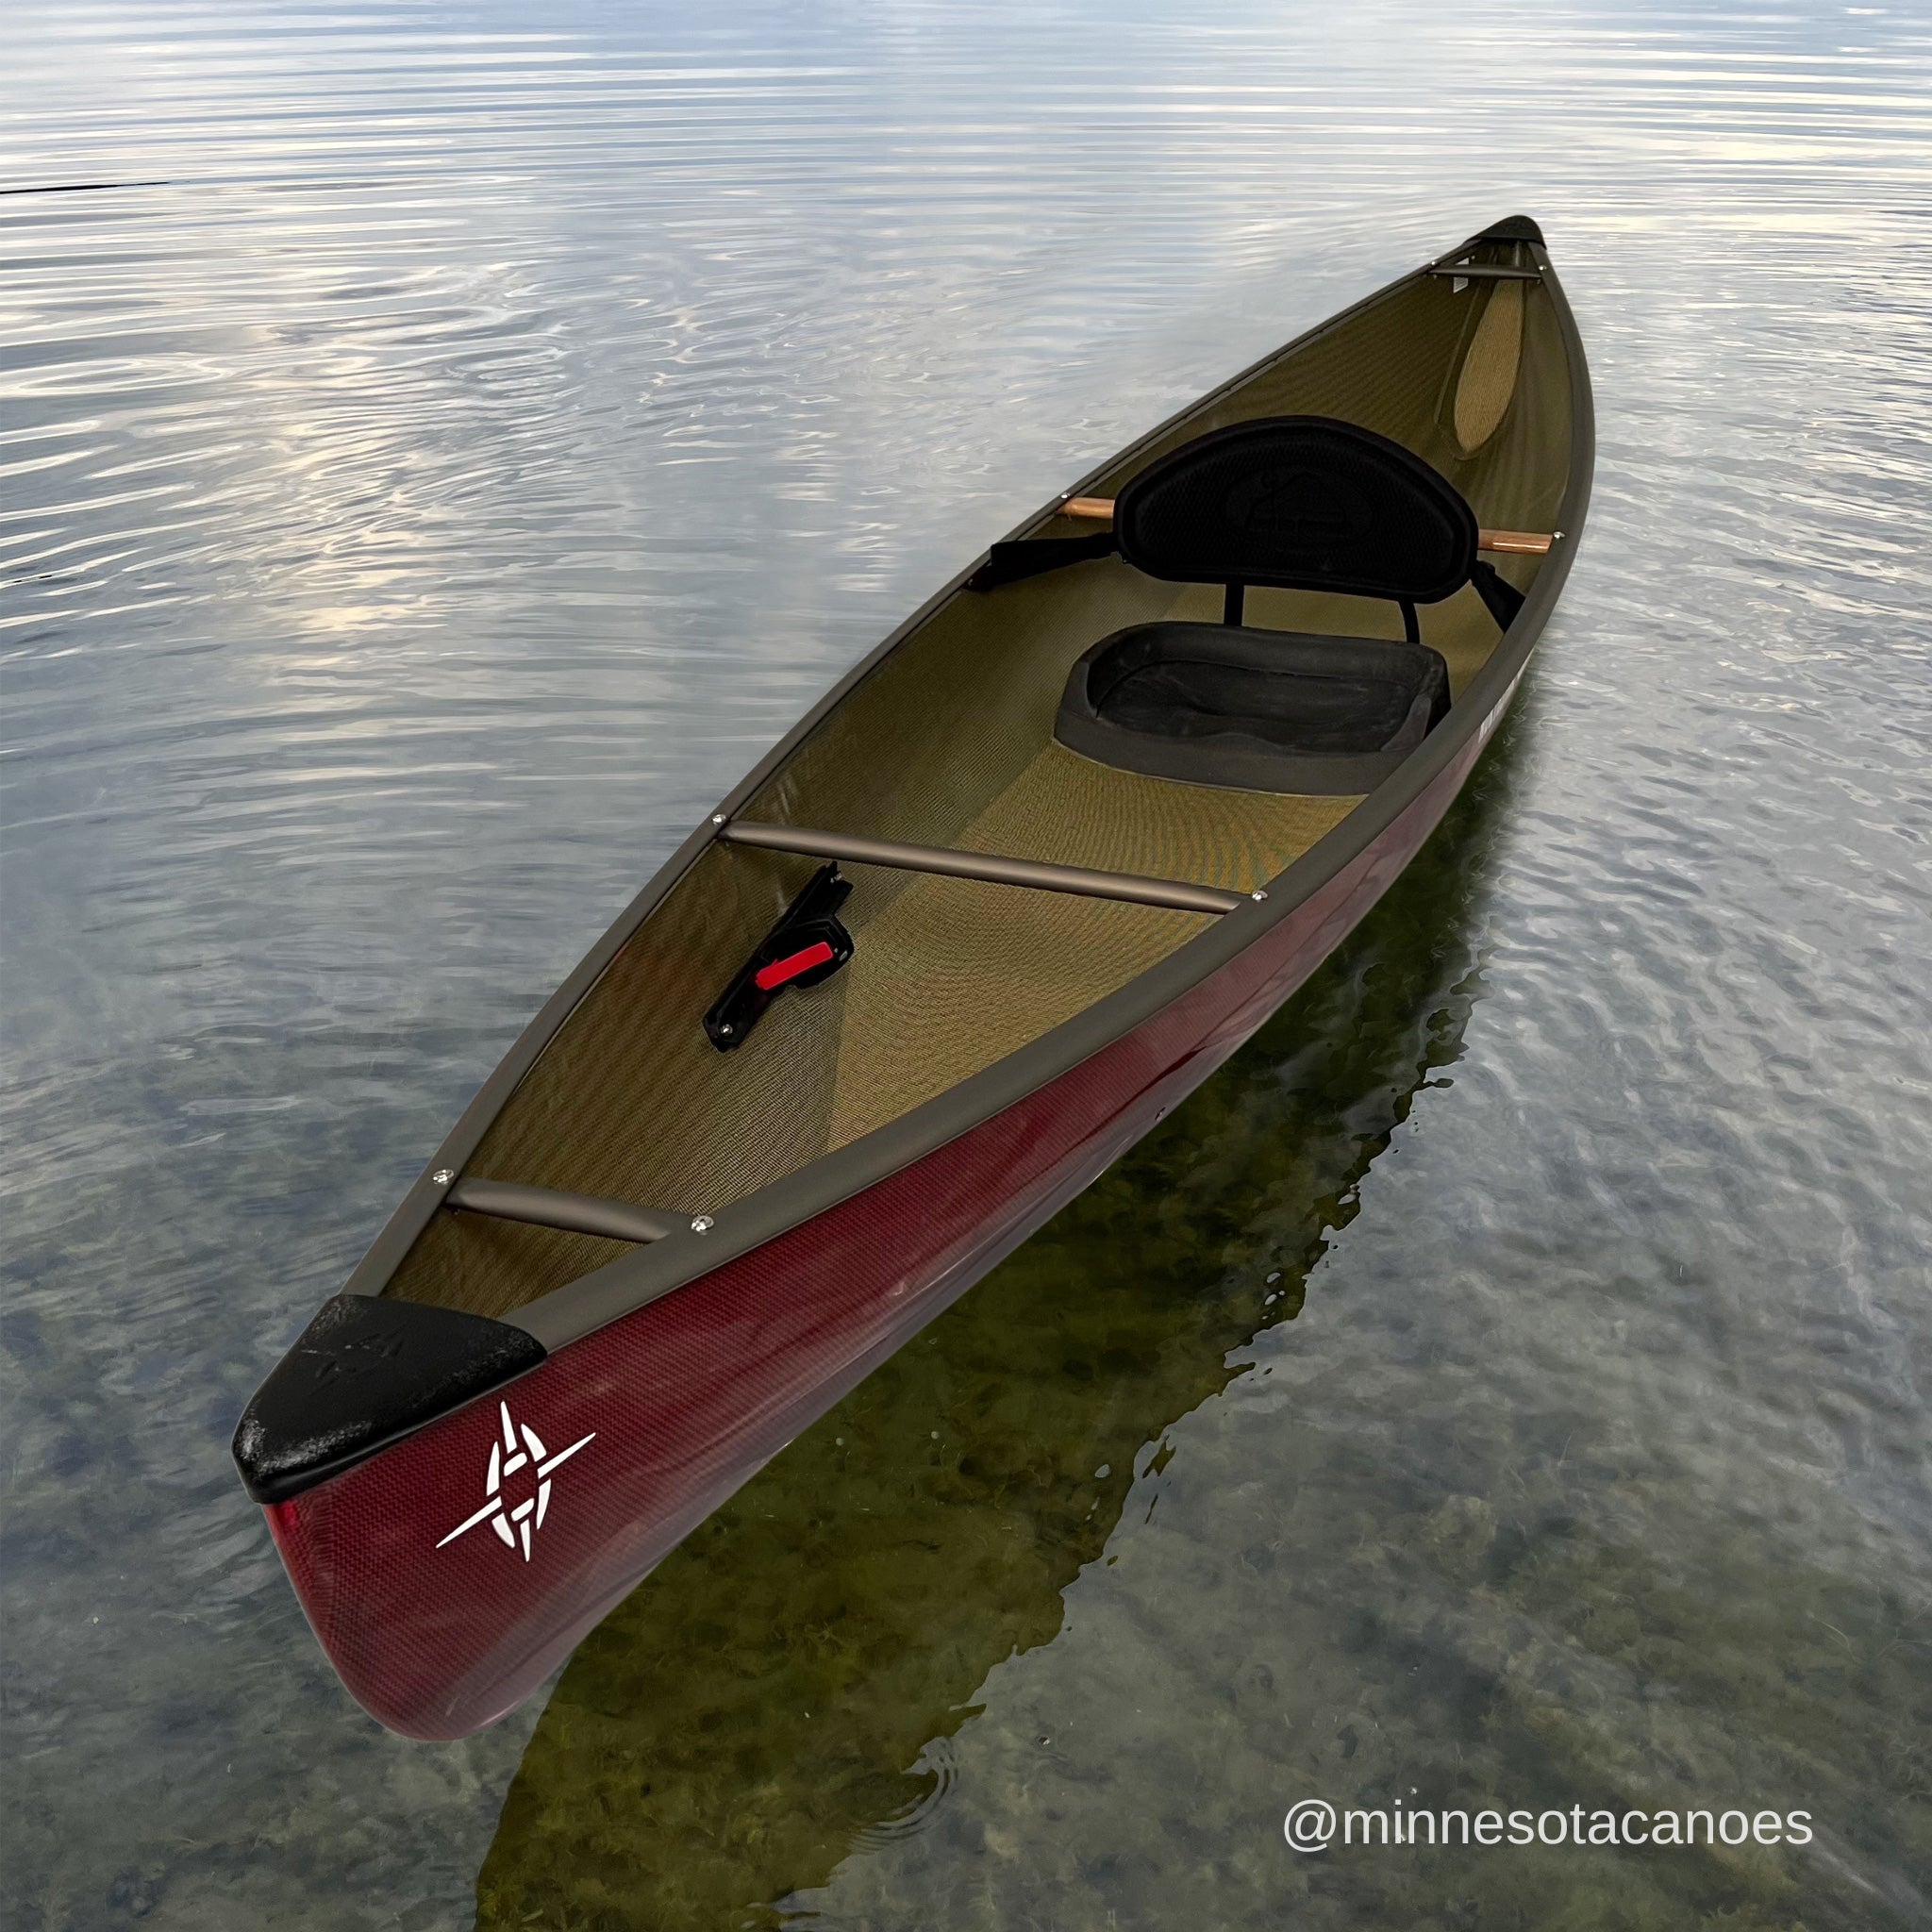 ADK (12' 0") Ruby WhiteGold Solo Northstar Canoe